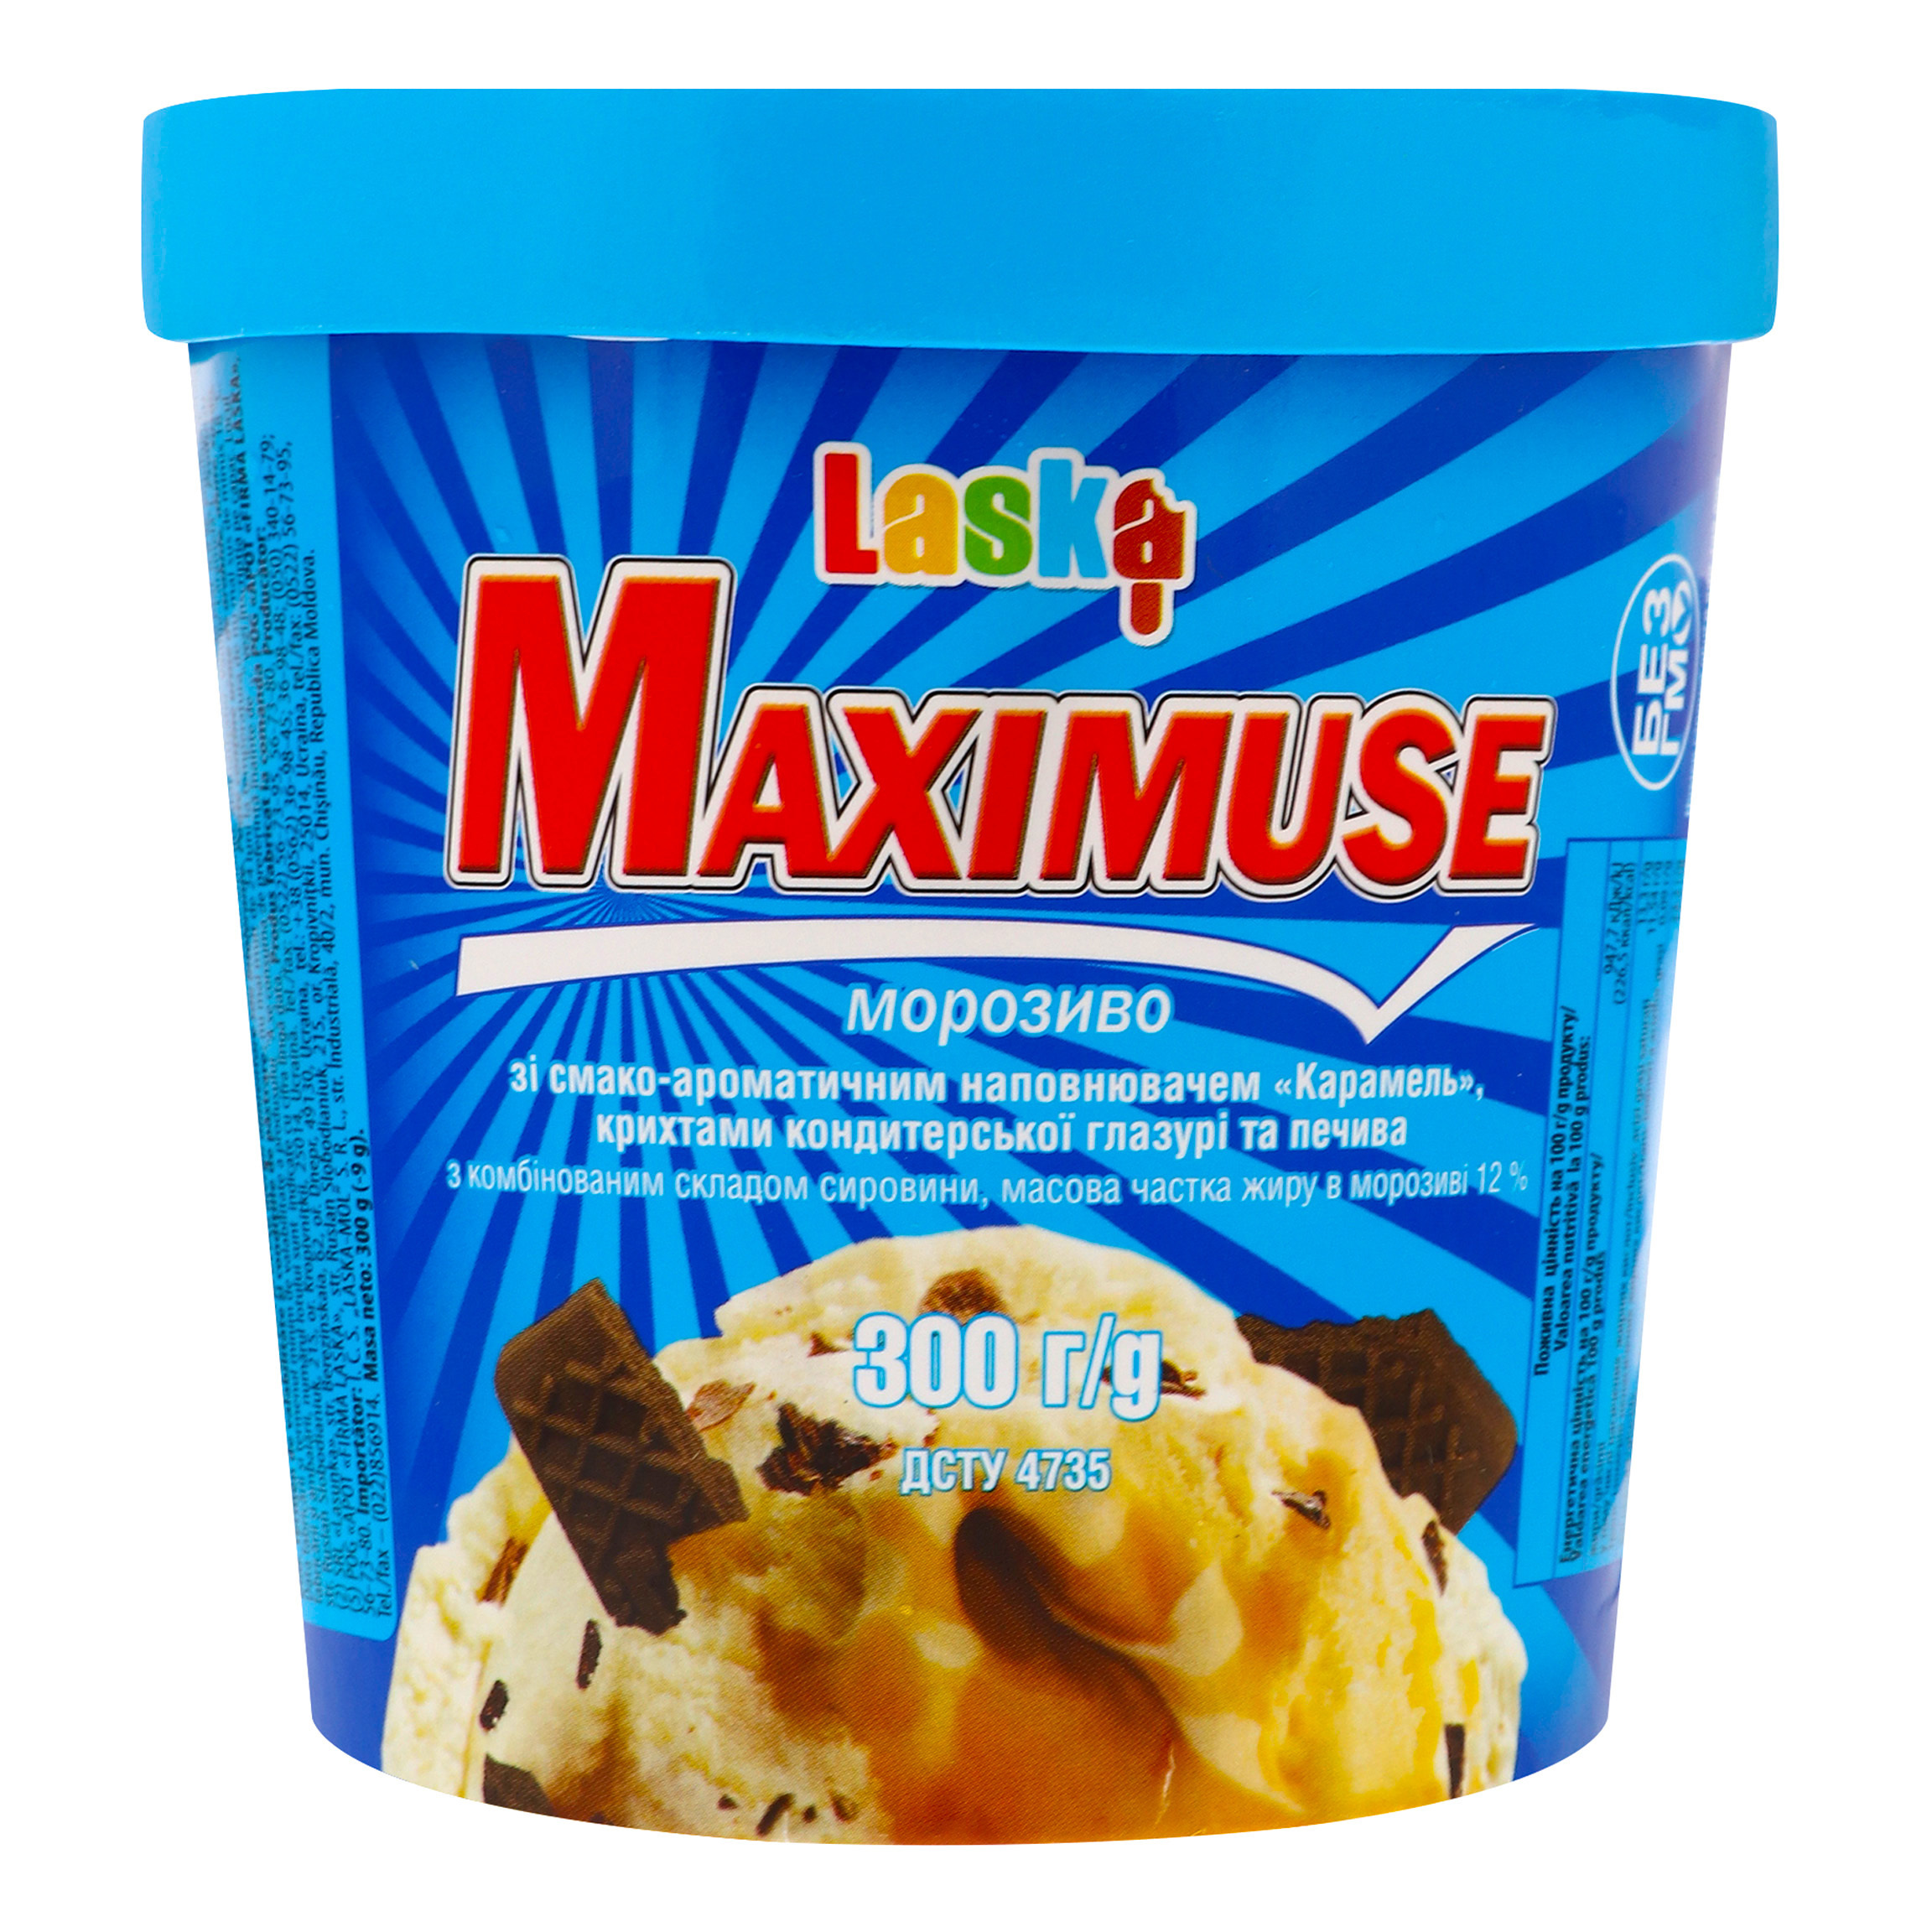 Ice cream Laska Maximuse 300g